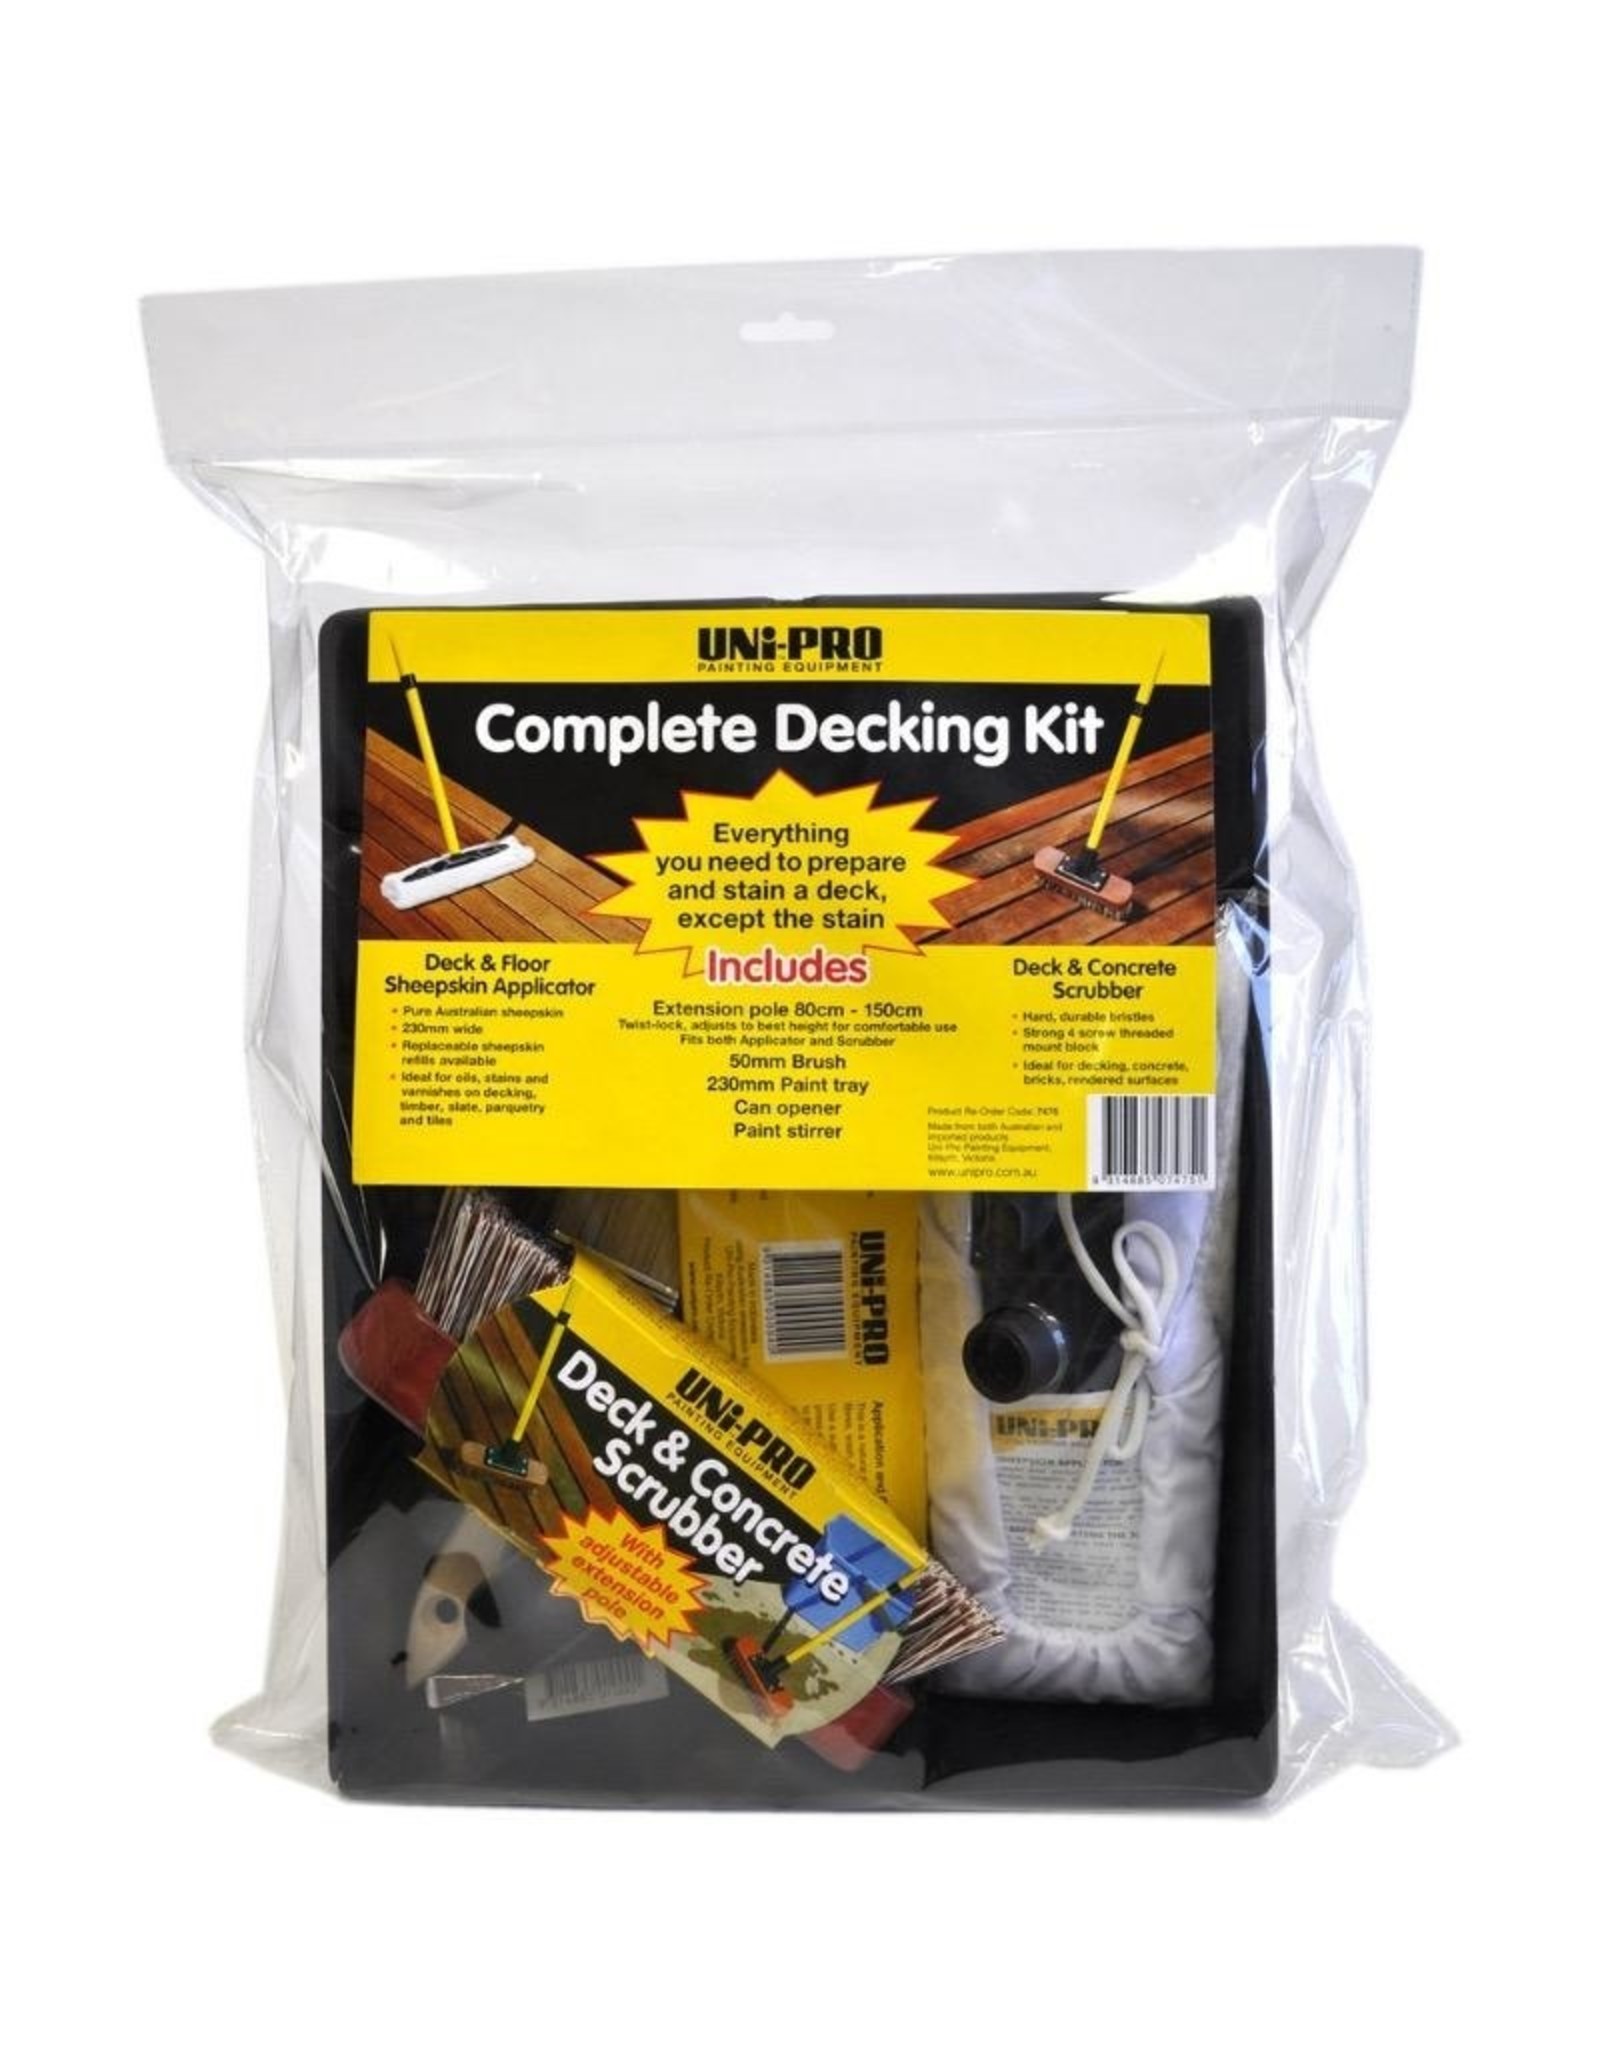 UNI-PRO Complete Decking Kit